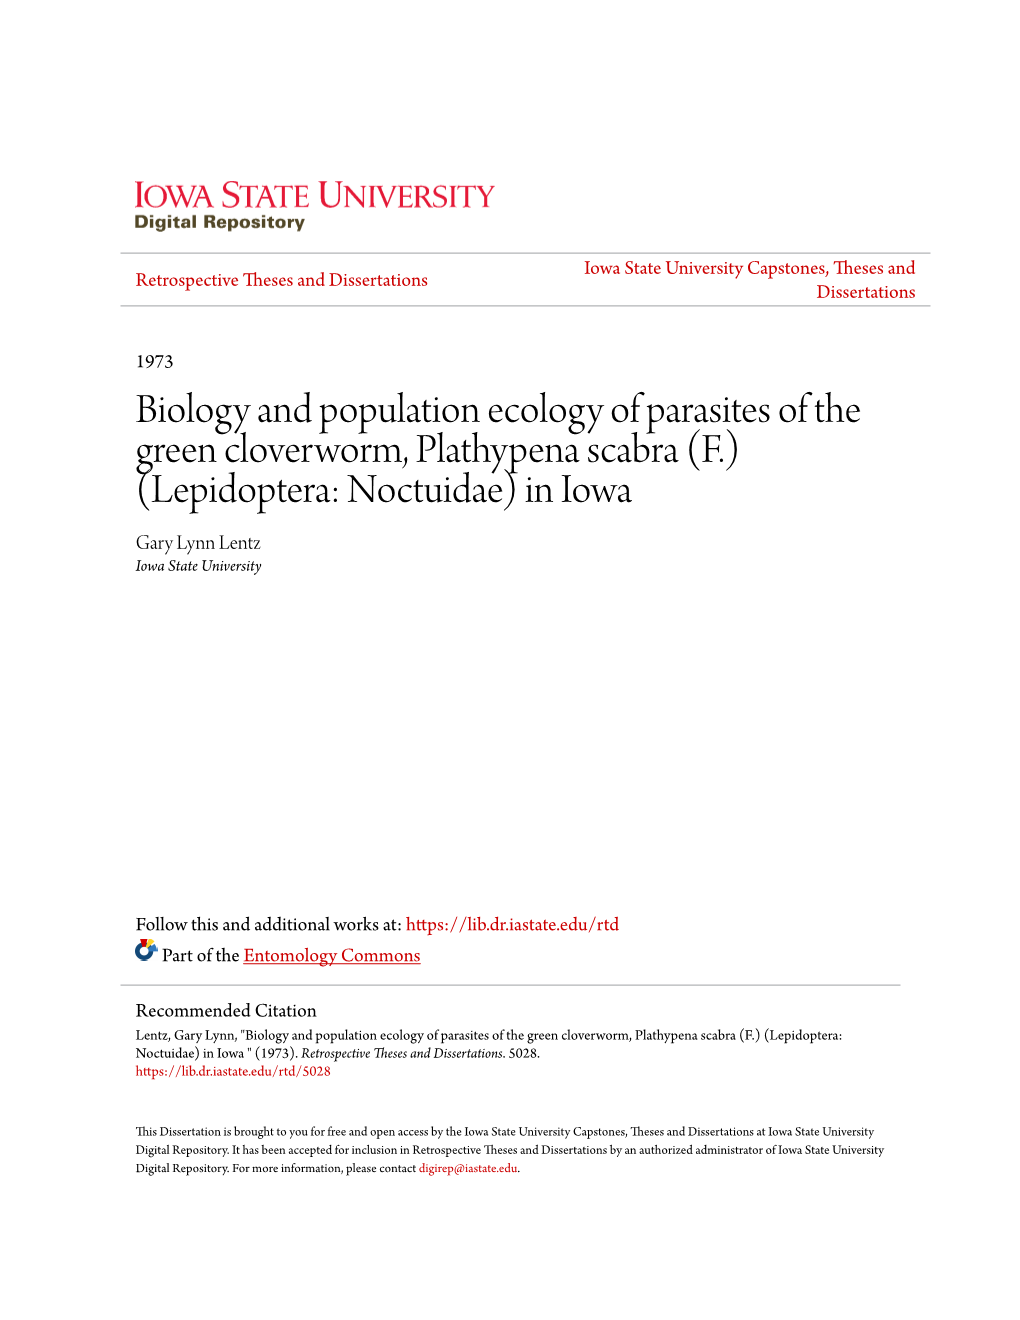 Biology and Population Ecology of Parasites of the Green Cloverworm, Plathypena Scabra (F.) (Lepidoptera: Noctuidae) in Iowa Gary Lynn Lentz Iowa State University